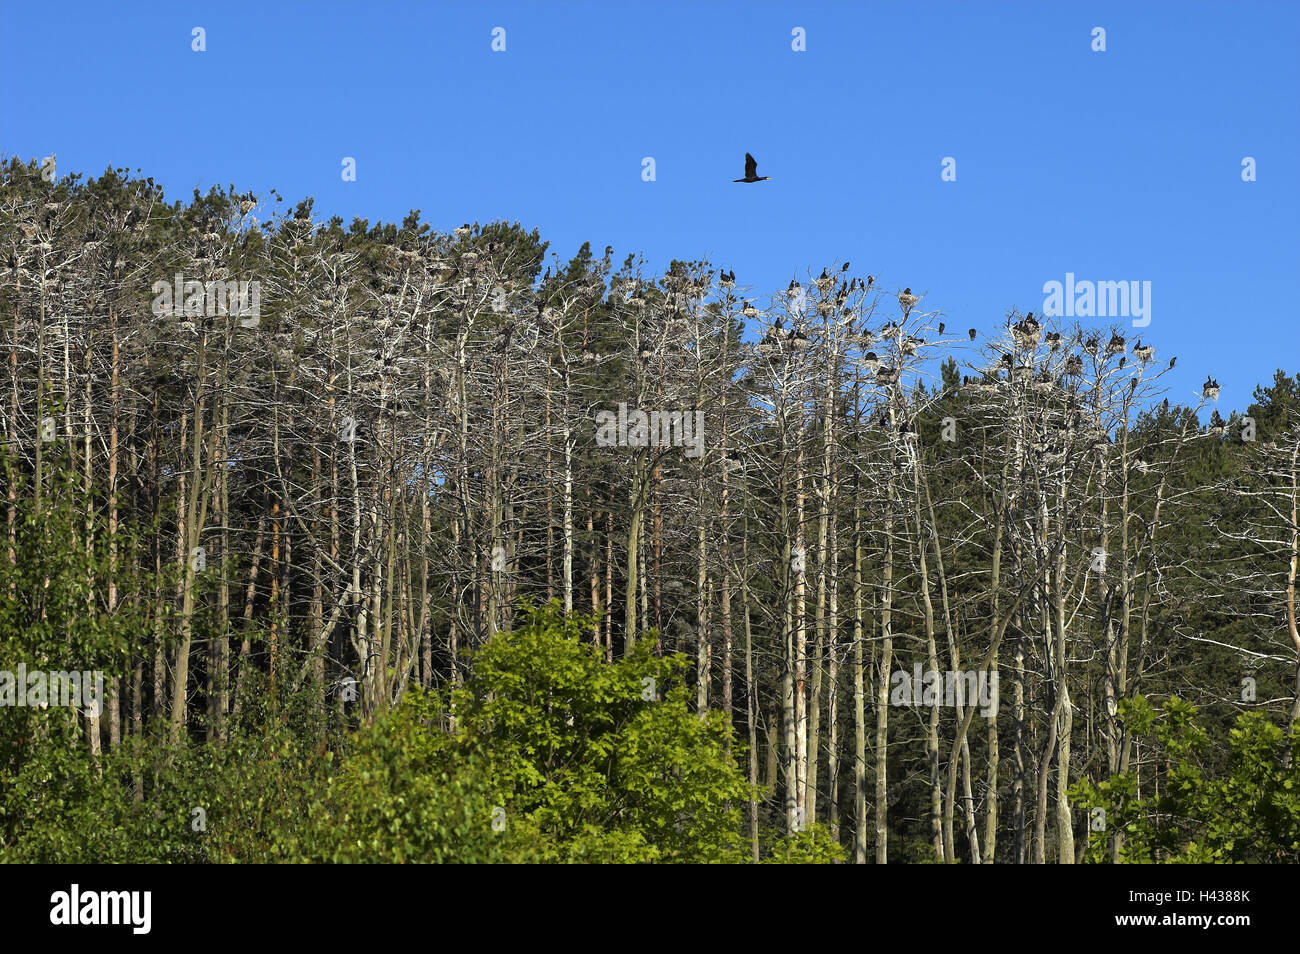 Heron's mountain, trees, grey herons, cormorants, brood colony, Juodkrante, national park health resort broad bay bar, Lithuania, Stock Photo